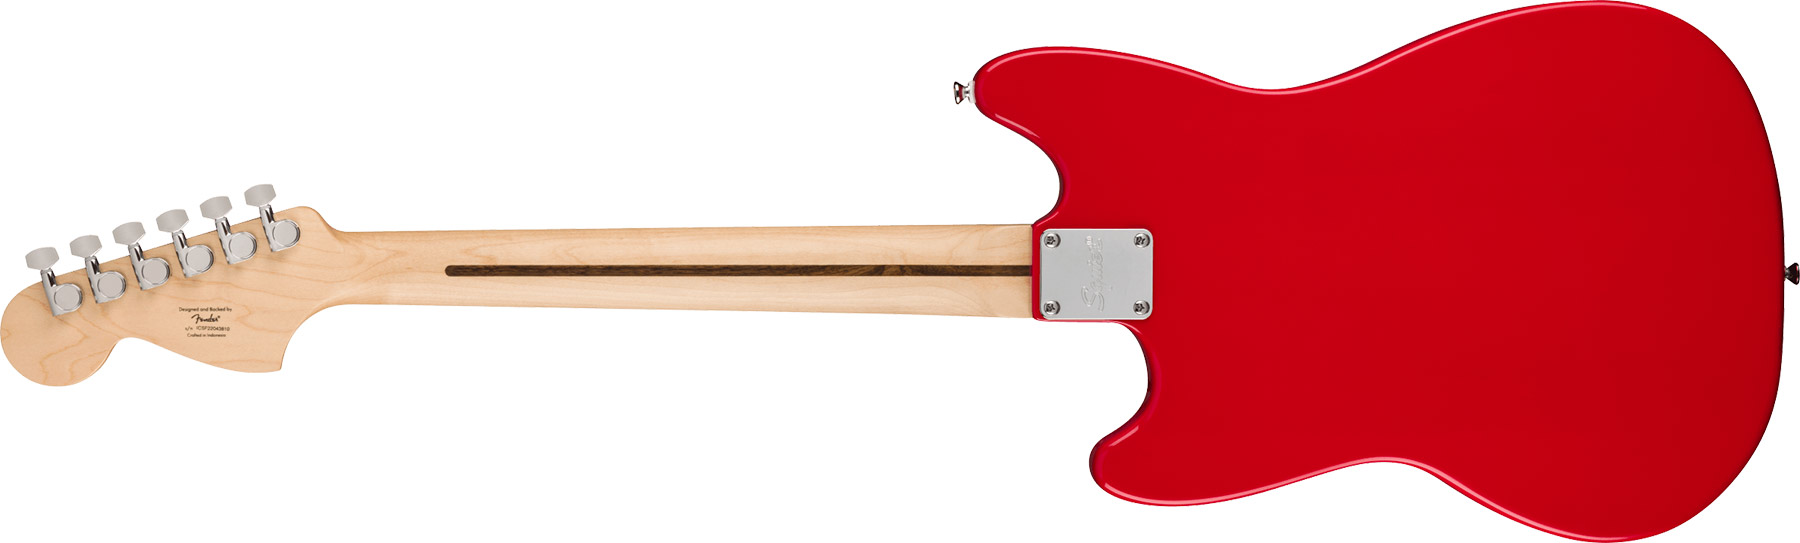 Squier Mustang Sonic 2s Ht Mn - Torino Red - Guitarra electrica retro rock - Variation 1